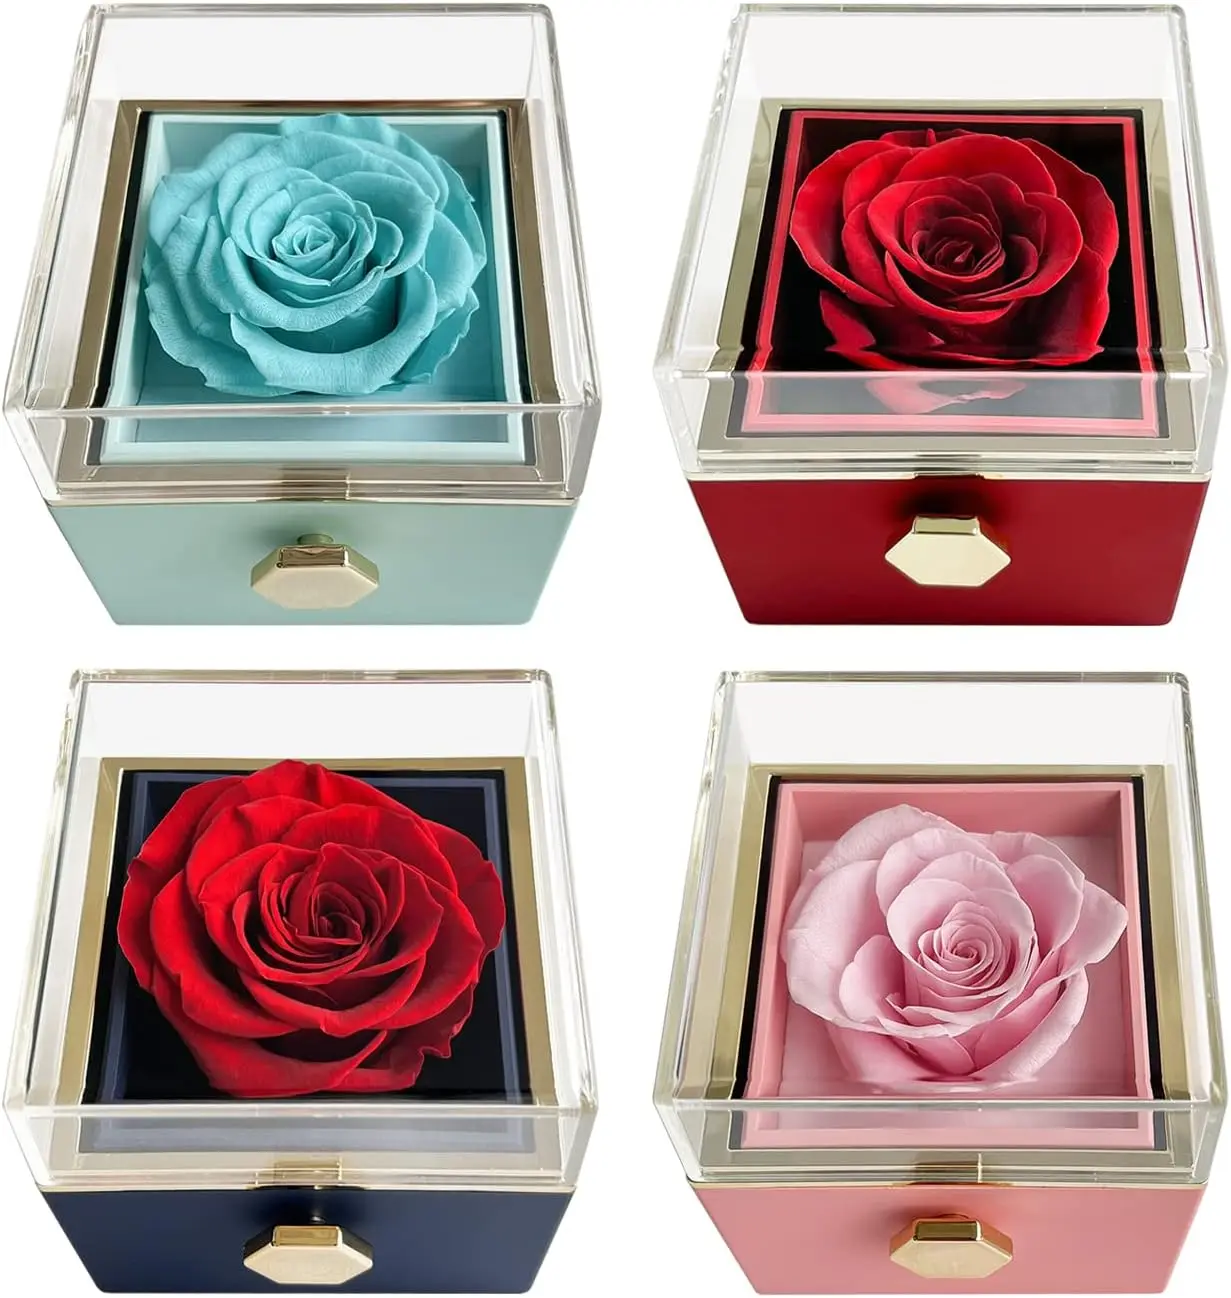 https://ae01.alicdn.com/kf/S3ca0659bcd0447998ac3b033d4cd15e5H/360-Degree-Rotation-Eternal-Real-Rose-In-Acrylic-Gift-Box-Ring-Locket-Jewelry-Box-Romantic-Valentine.jpg